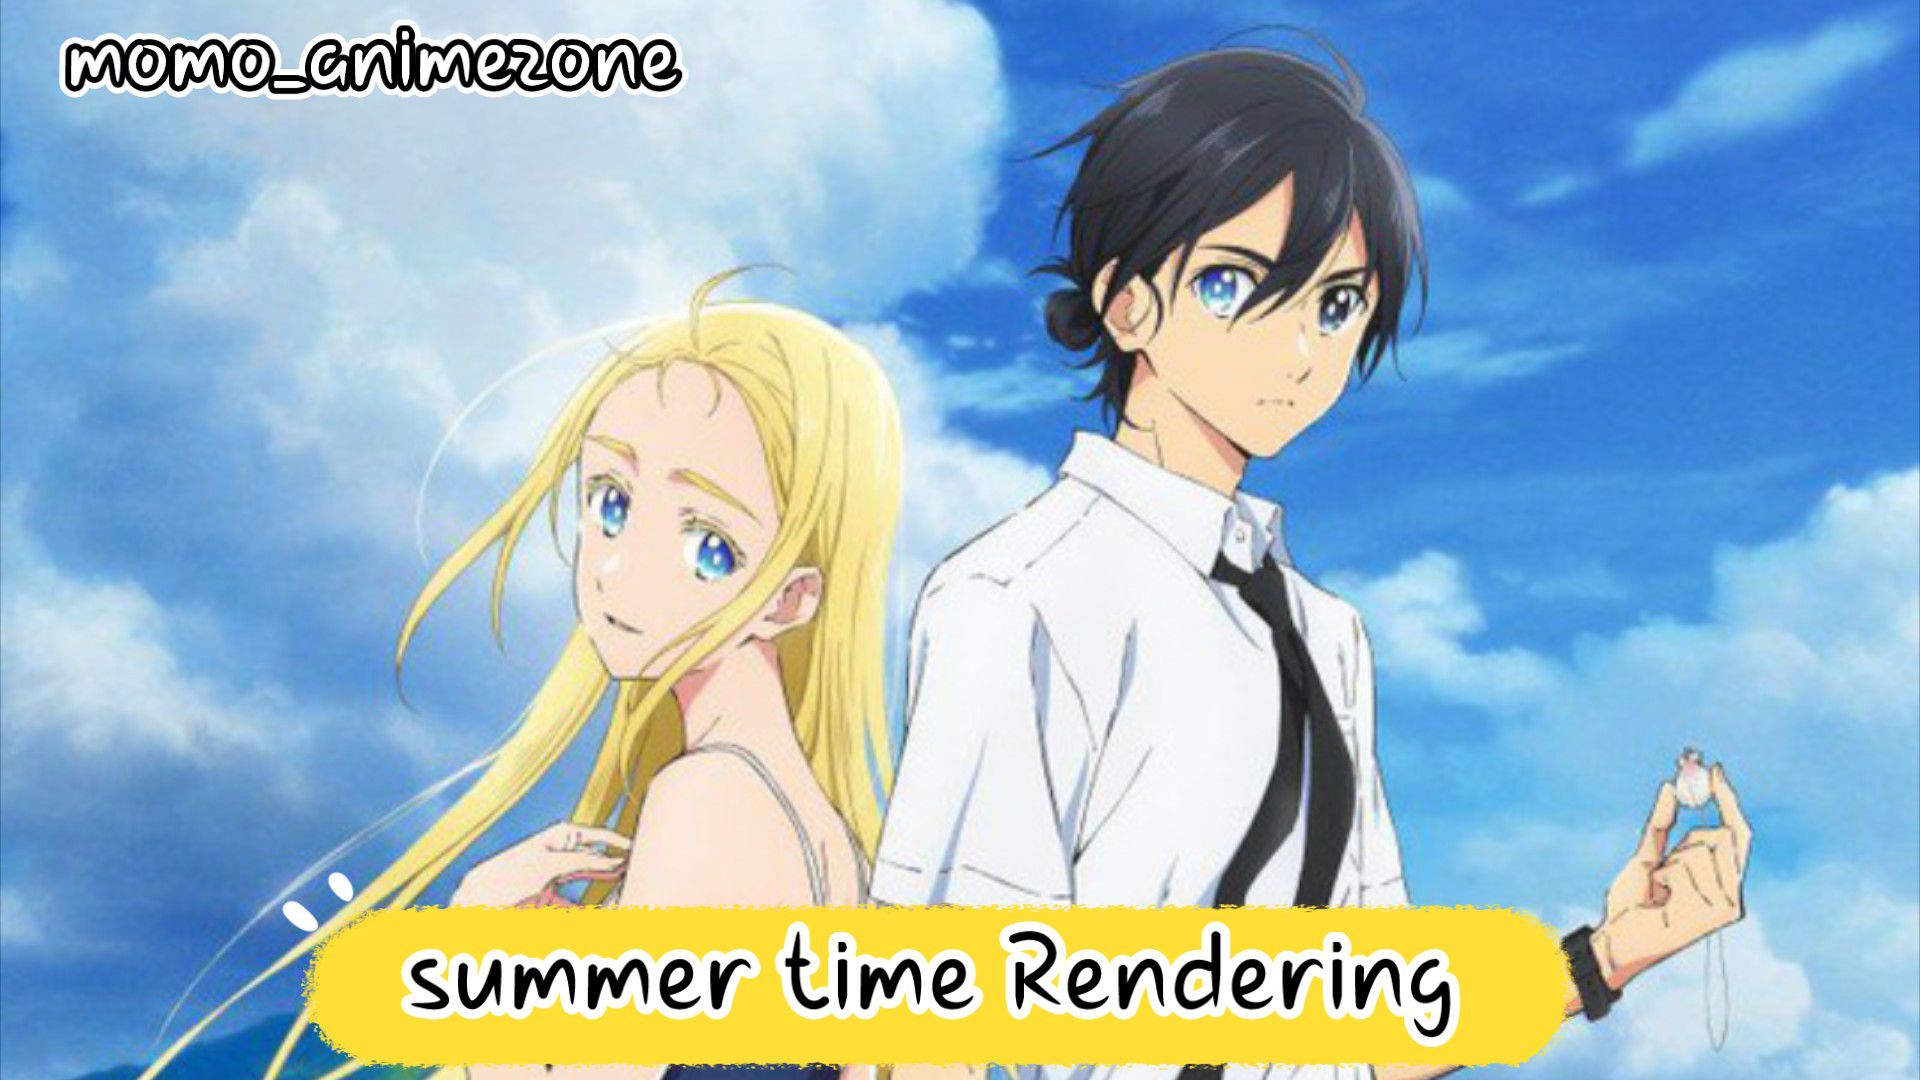 Summertime Rendering Ep 6: Data de lançamento, assista online